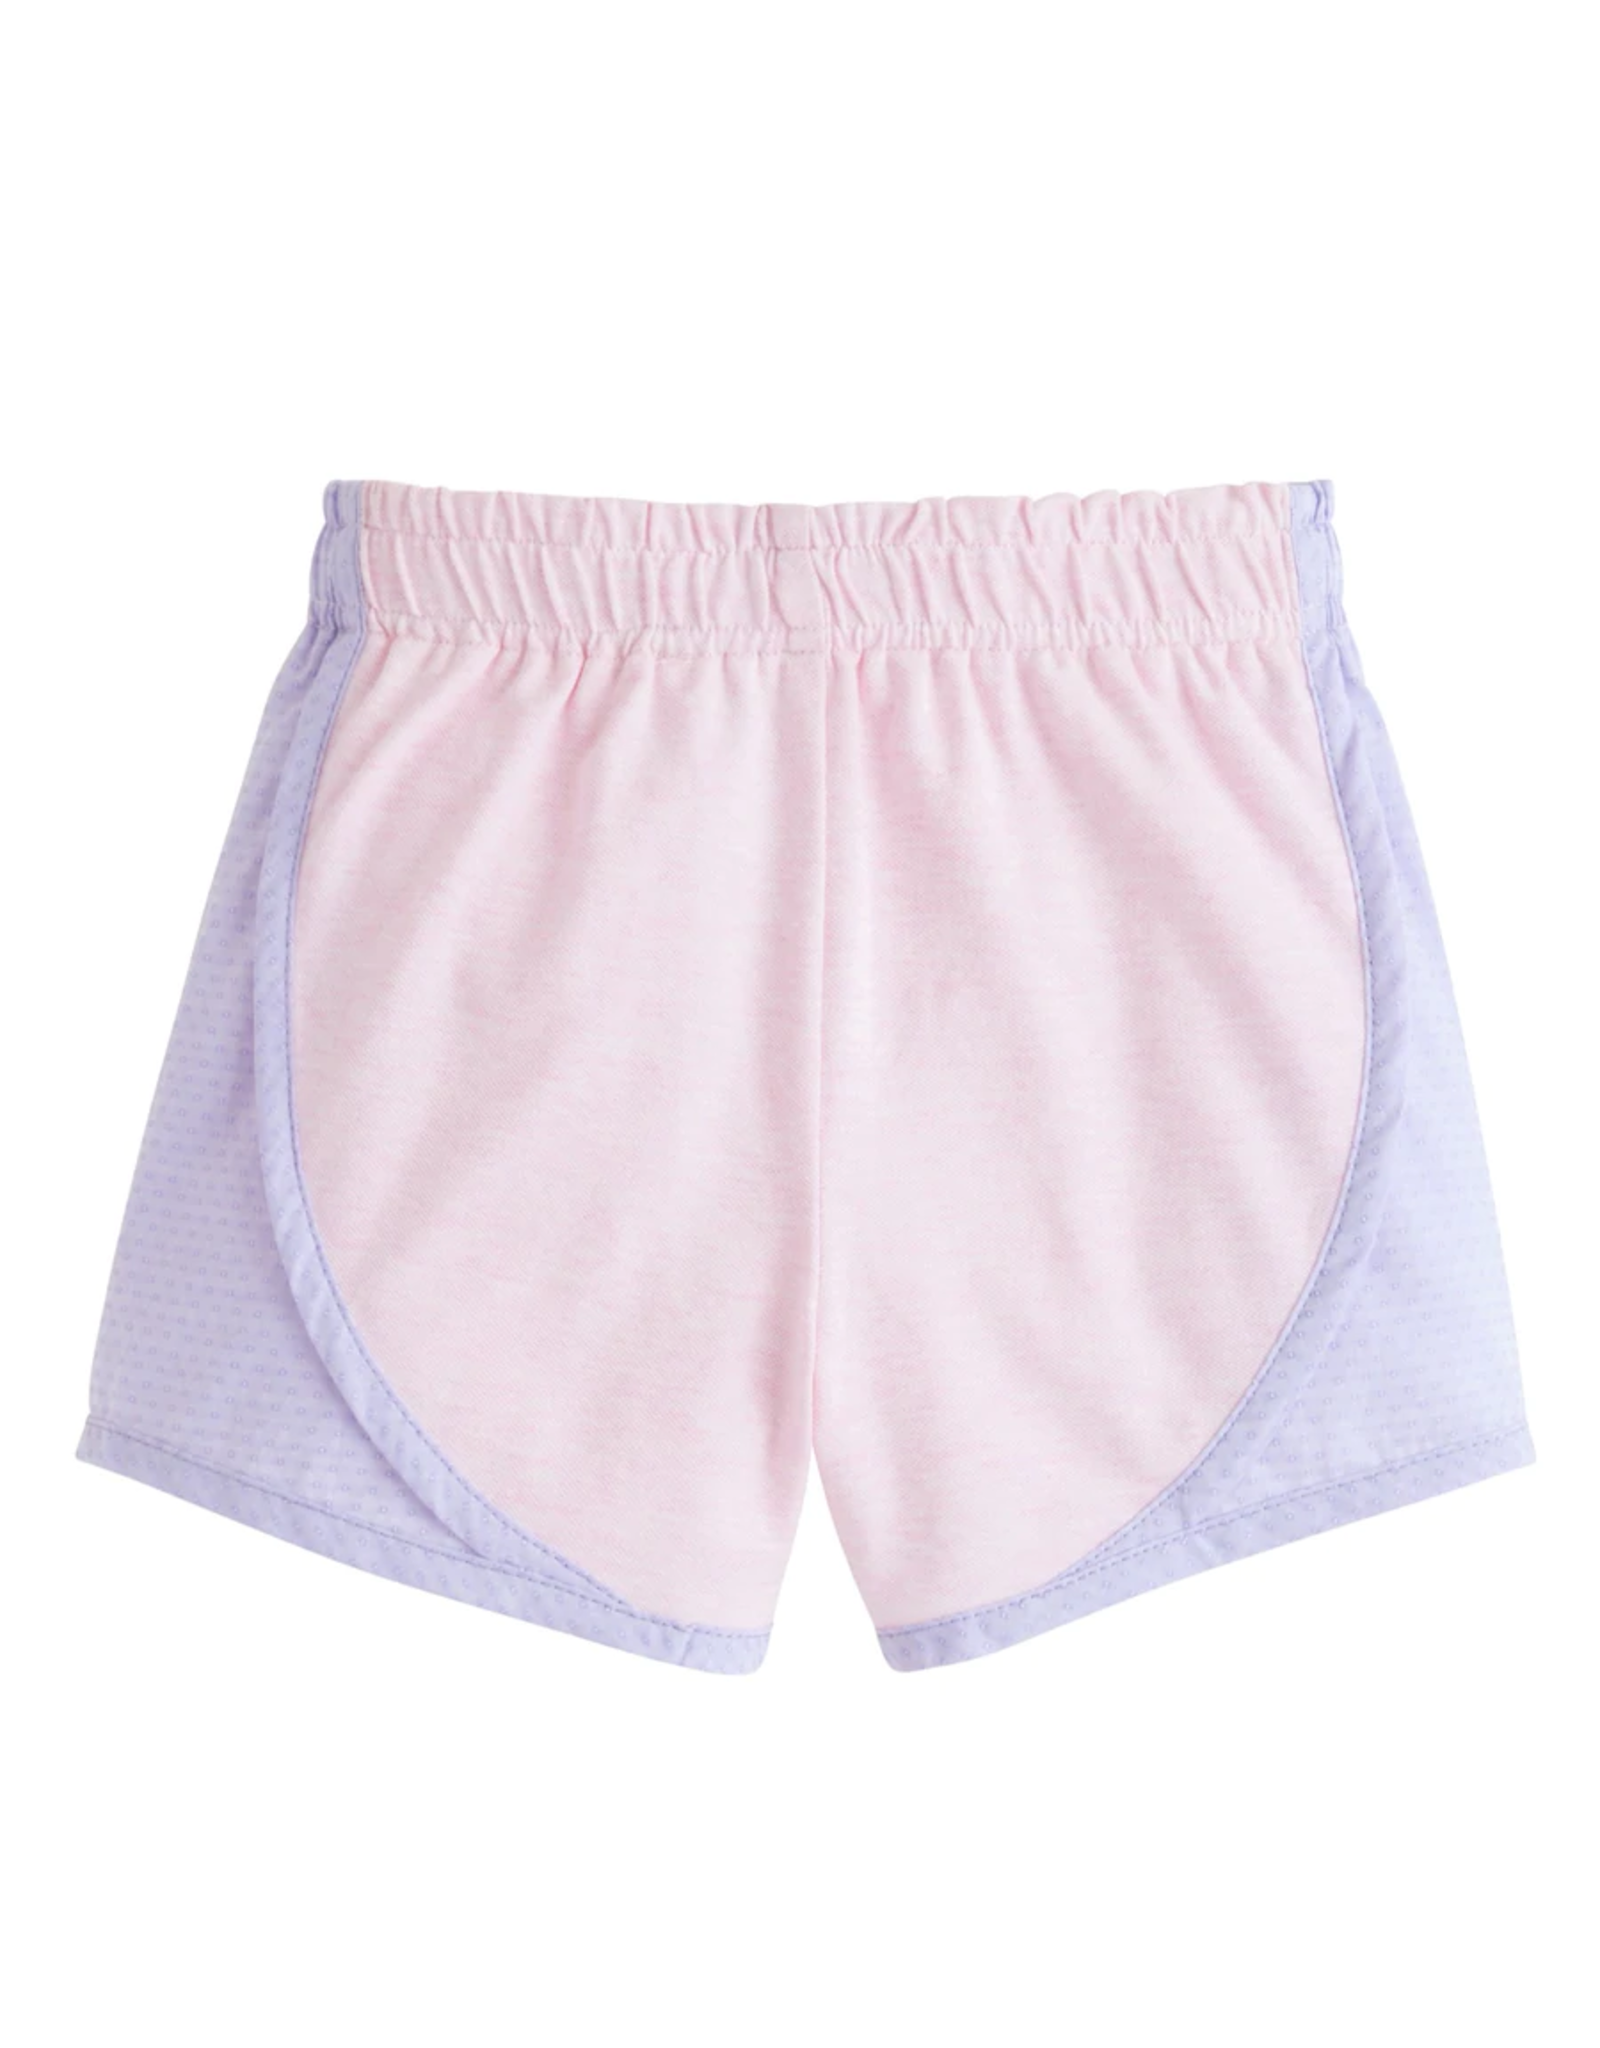 Bisby Track Shorts - Pink Pique